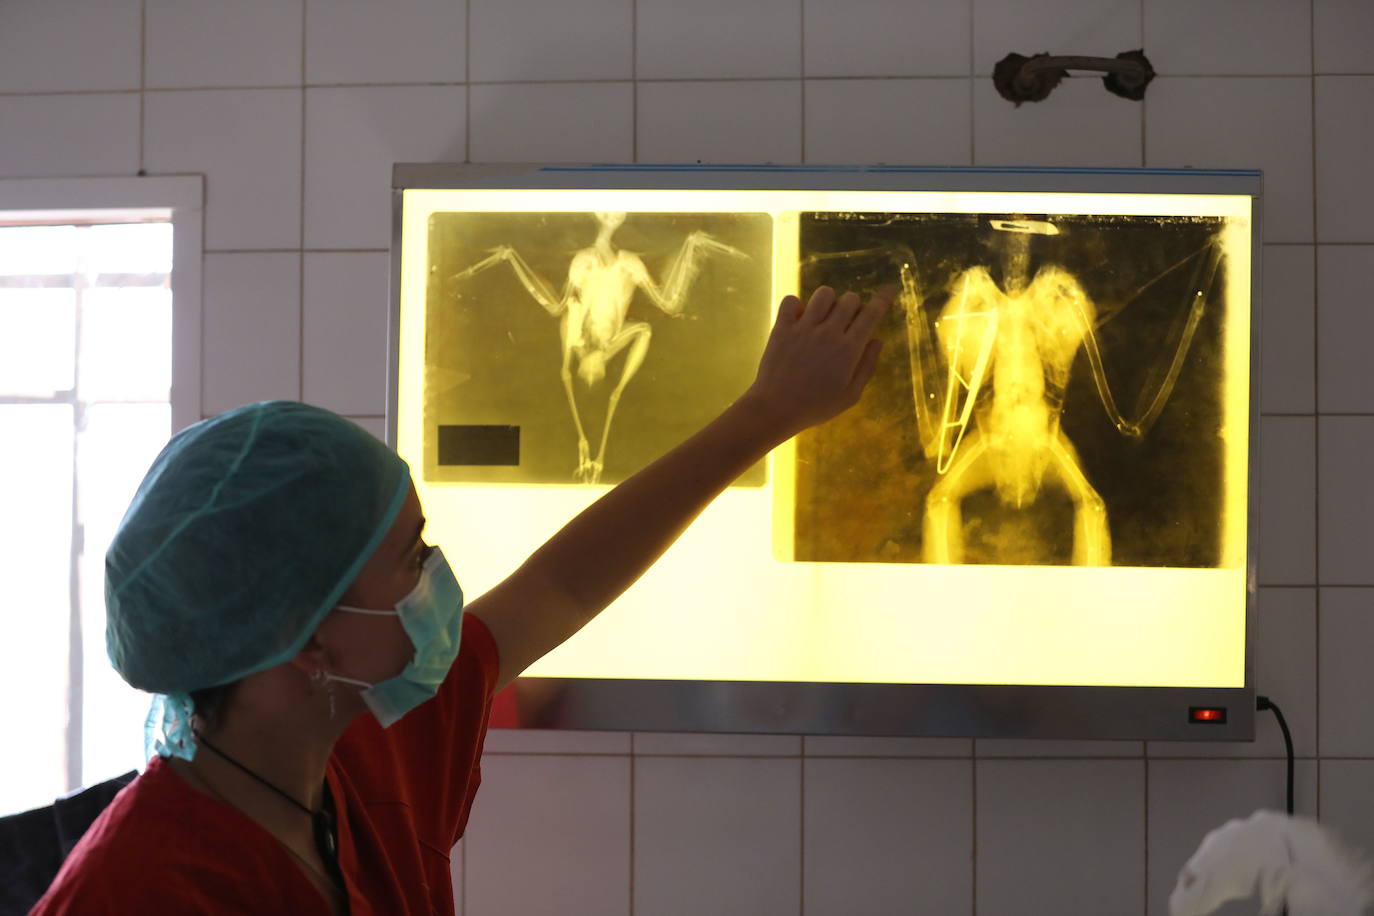 Fotos: Medicina quirúrgica en aves con traumatismos mediante la utilización de huesos de aves fallecidas